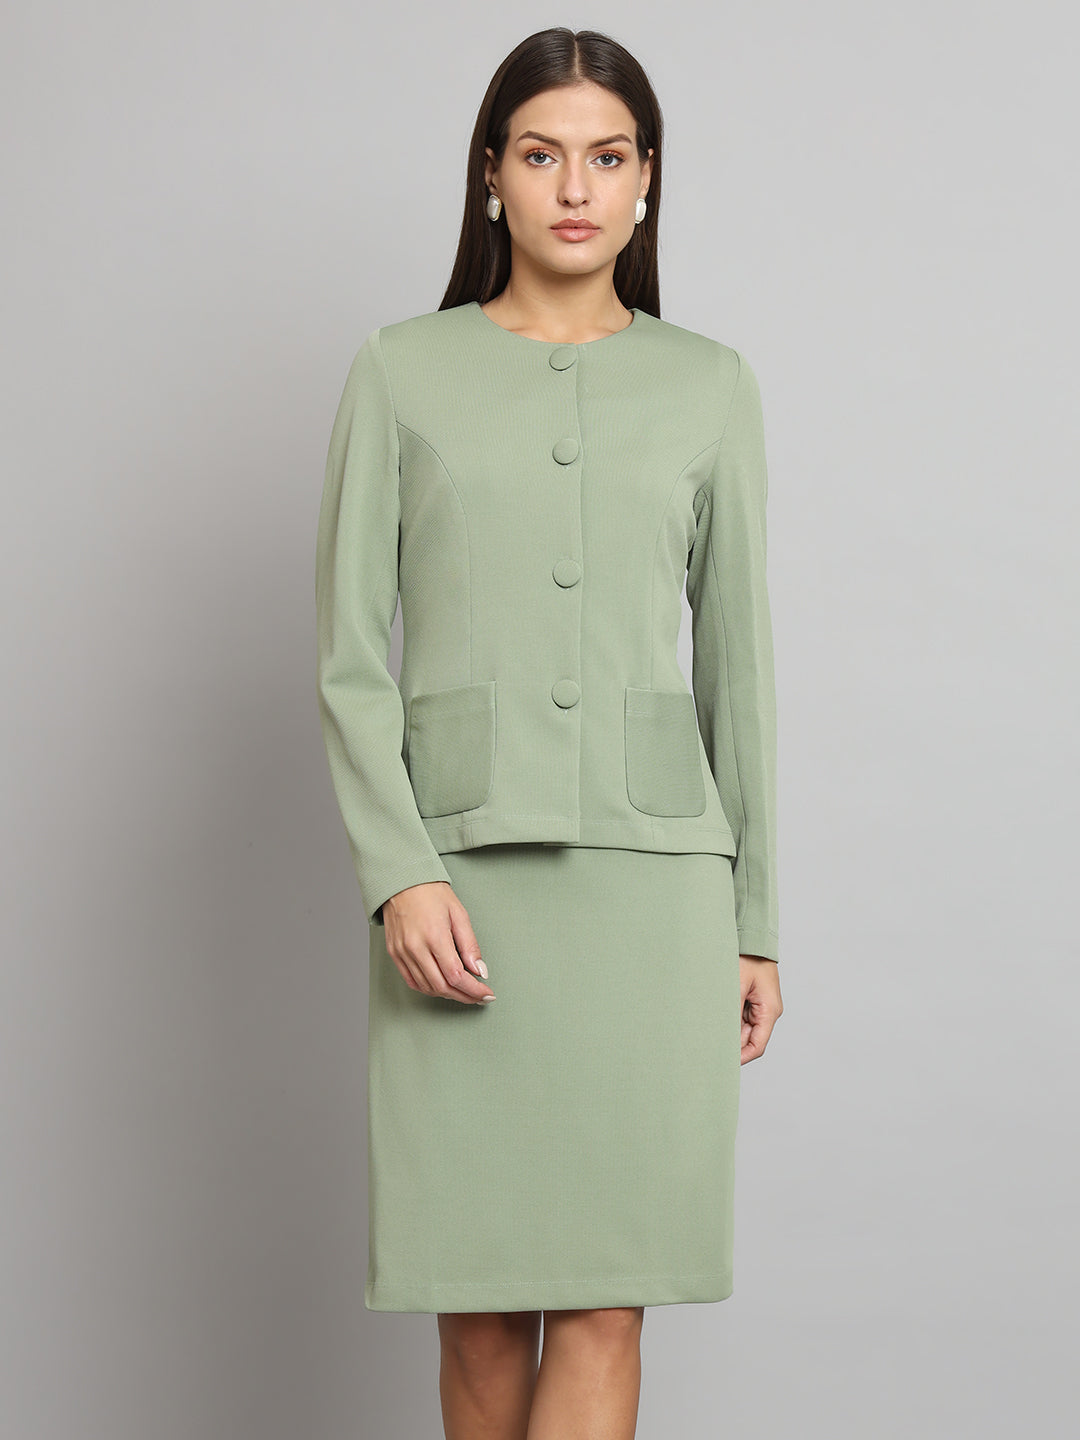 Formal Stretch Dress Suit - Sage Green